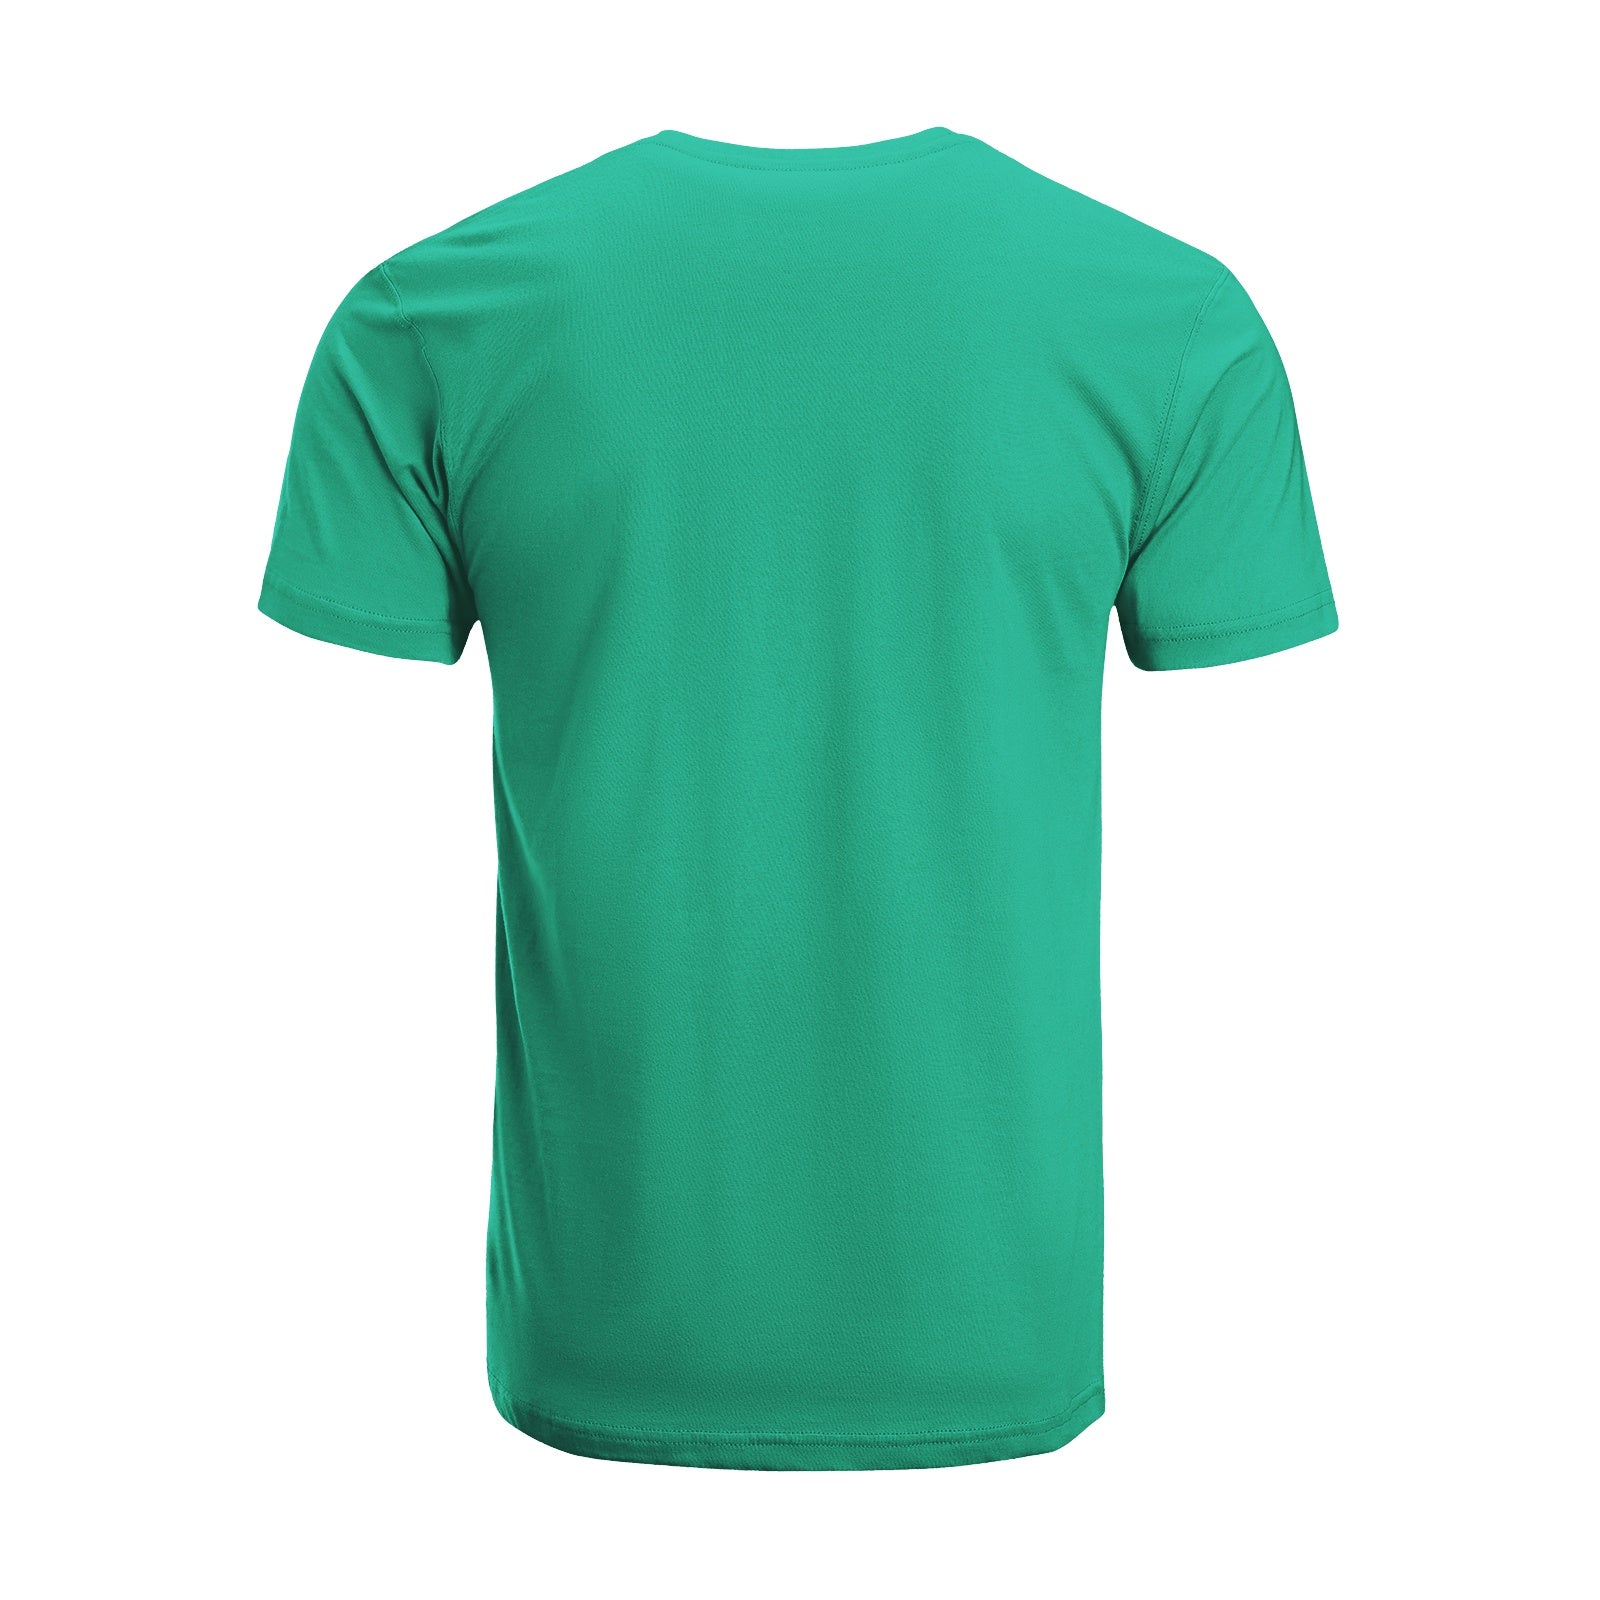 Unisex Short Sleeve Crew Neck Cotton Jersey T-Shirt CAT 29 - Tara-Outfits.com